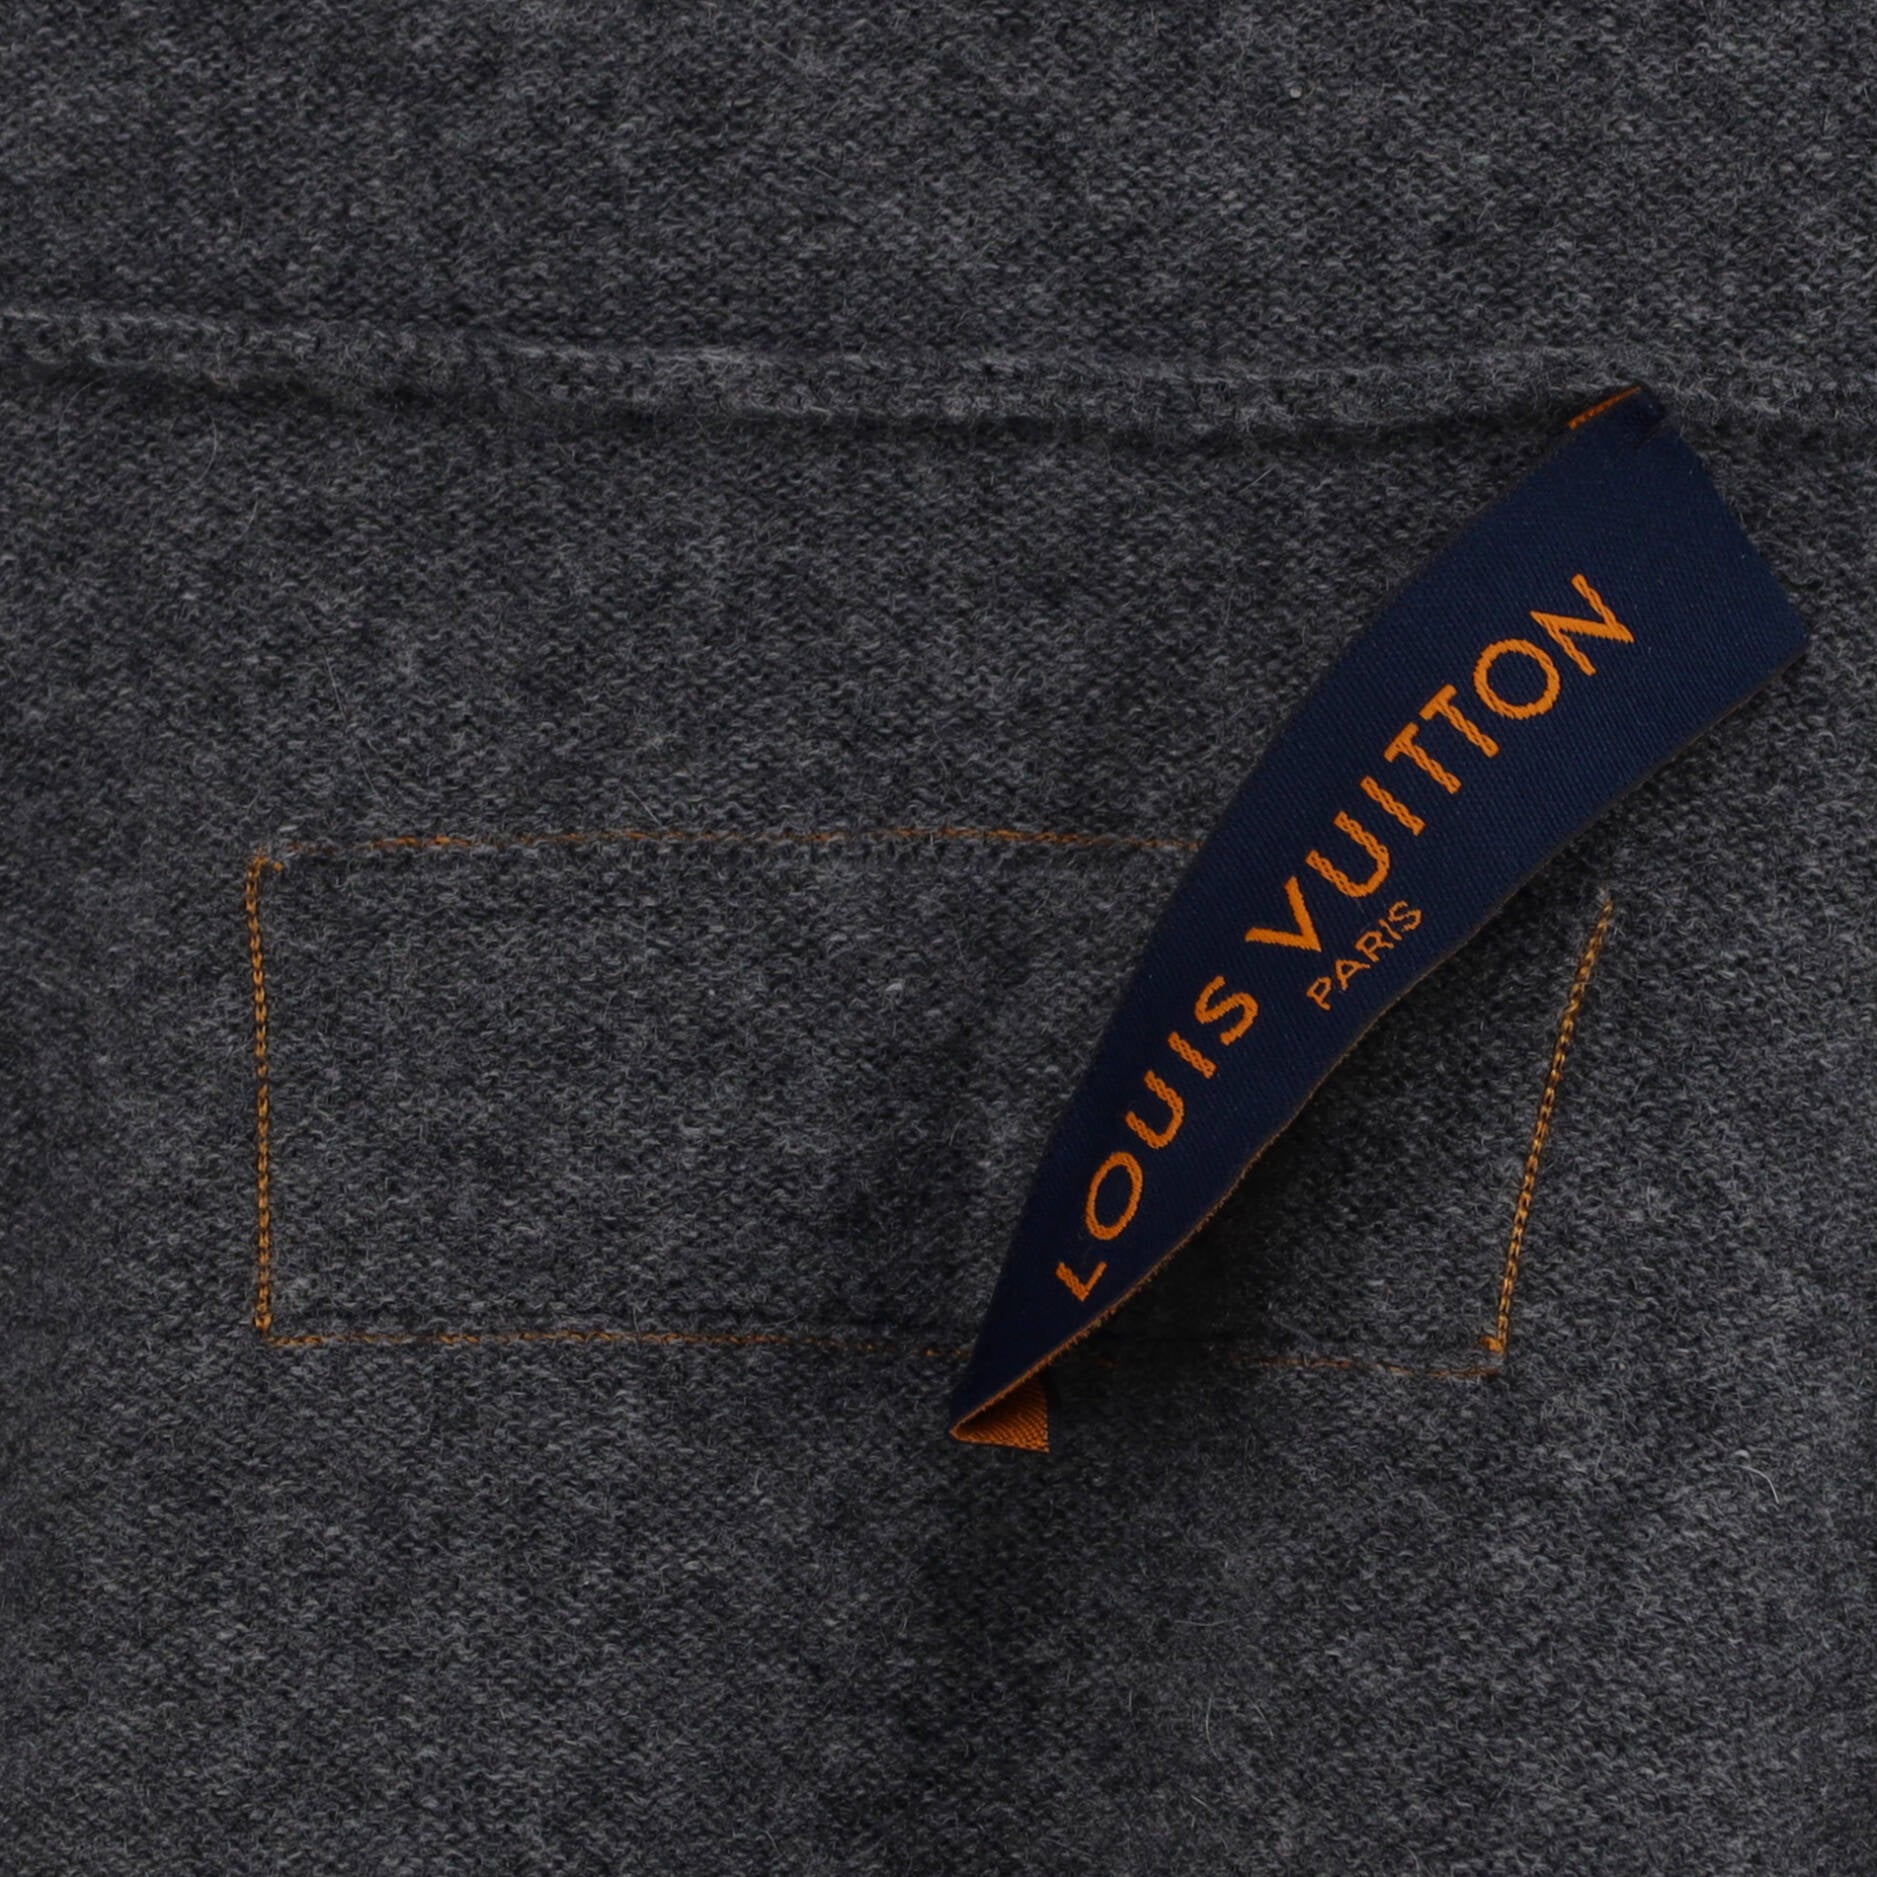 Louis Vuitton Men's Half And Half Monogram Crewneck Sweater Cashmere Blend